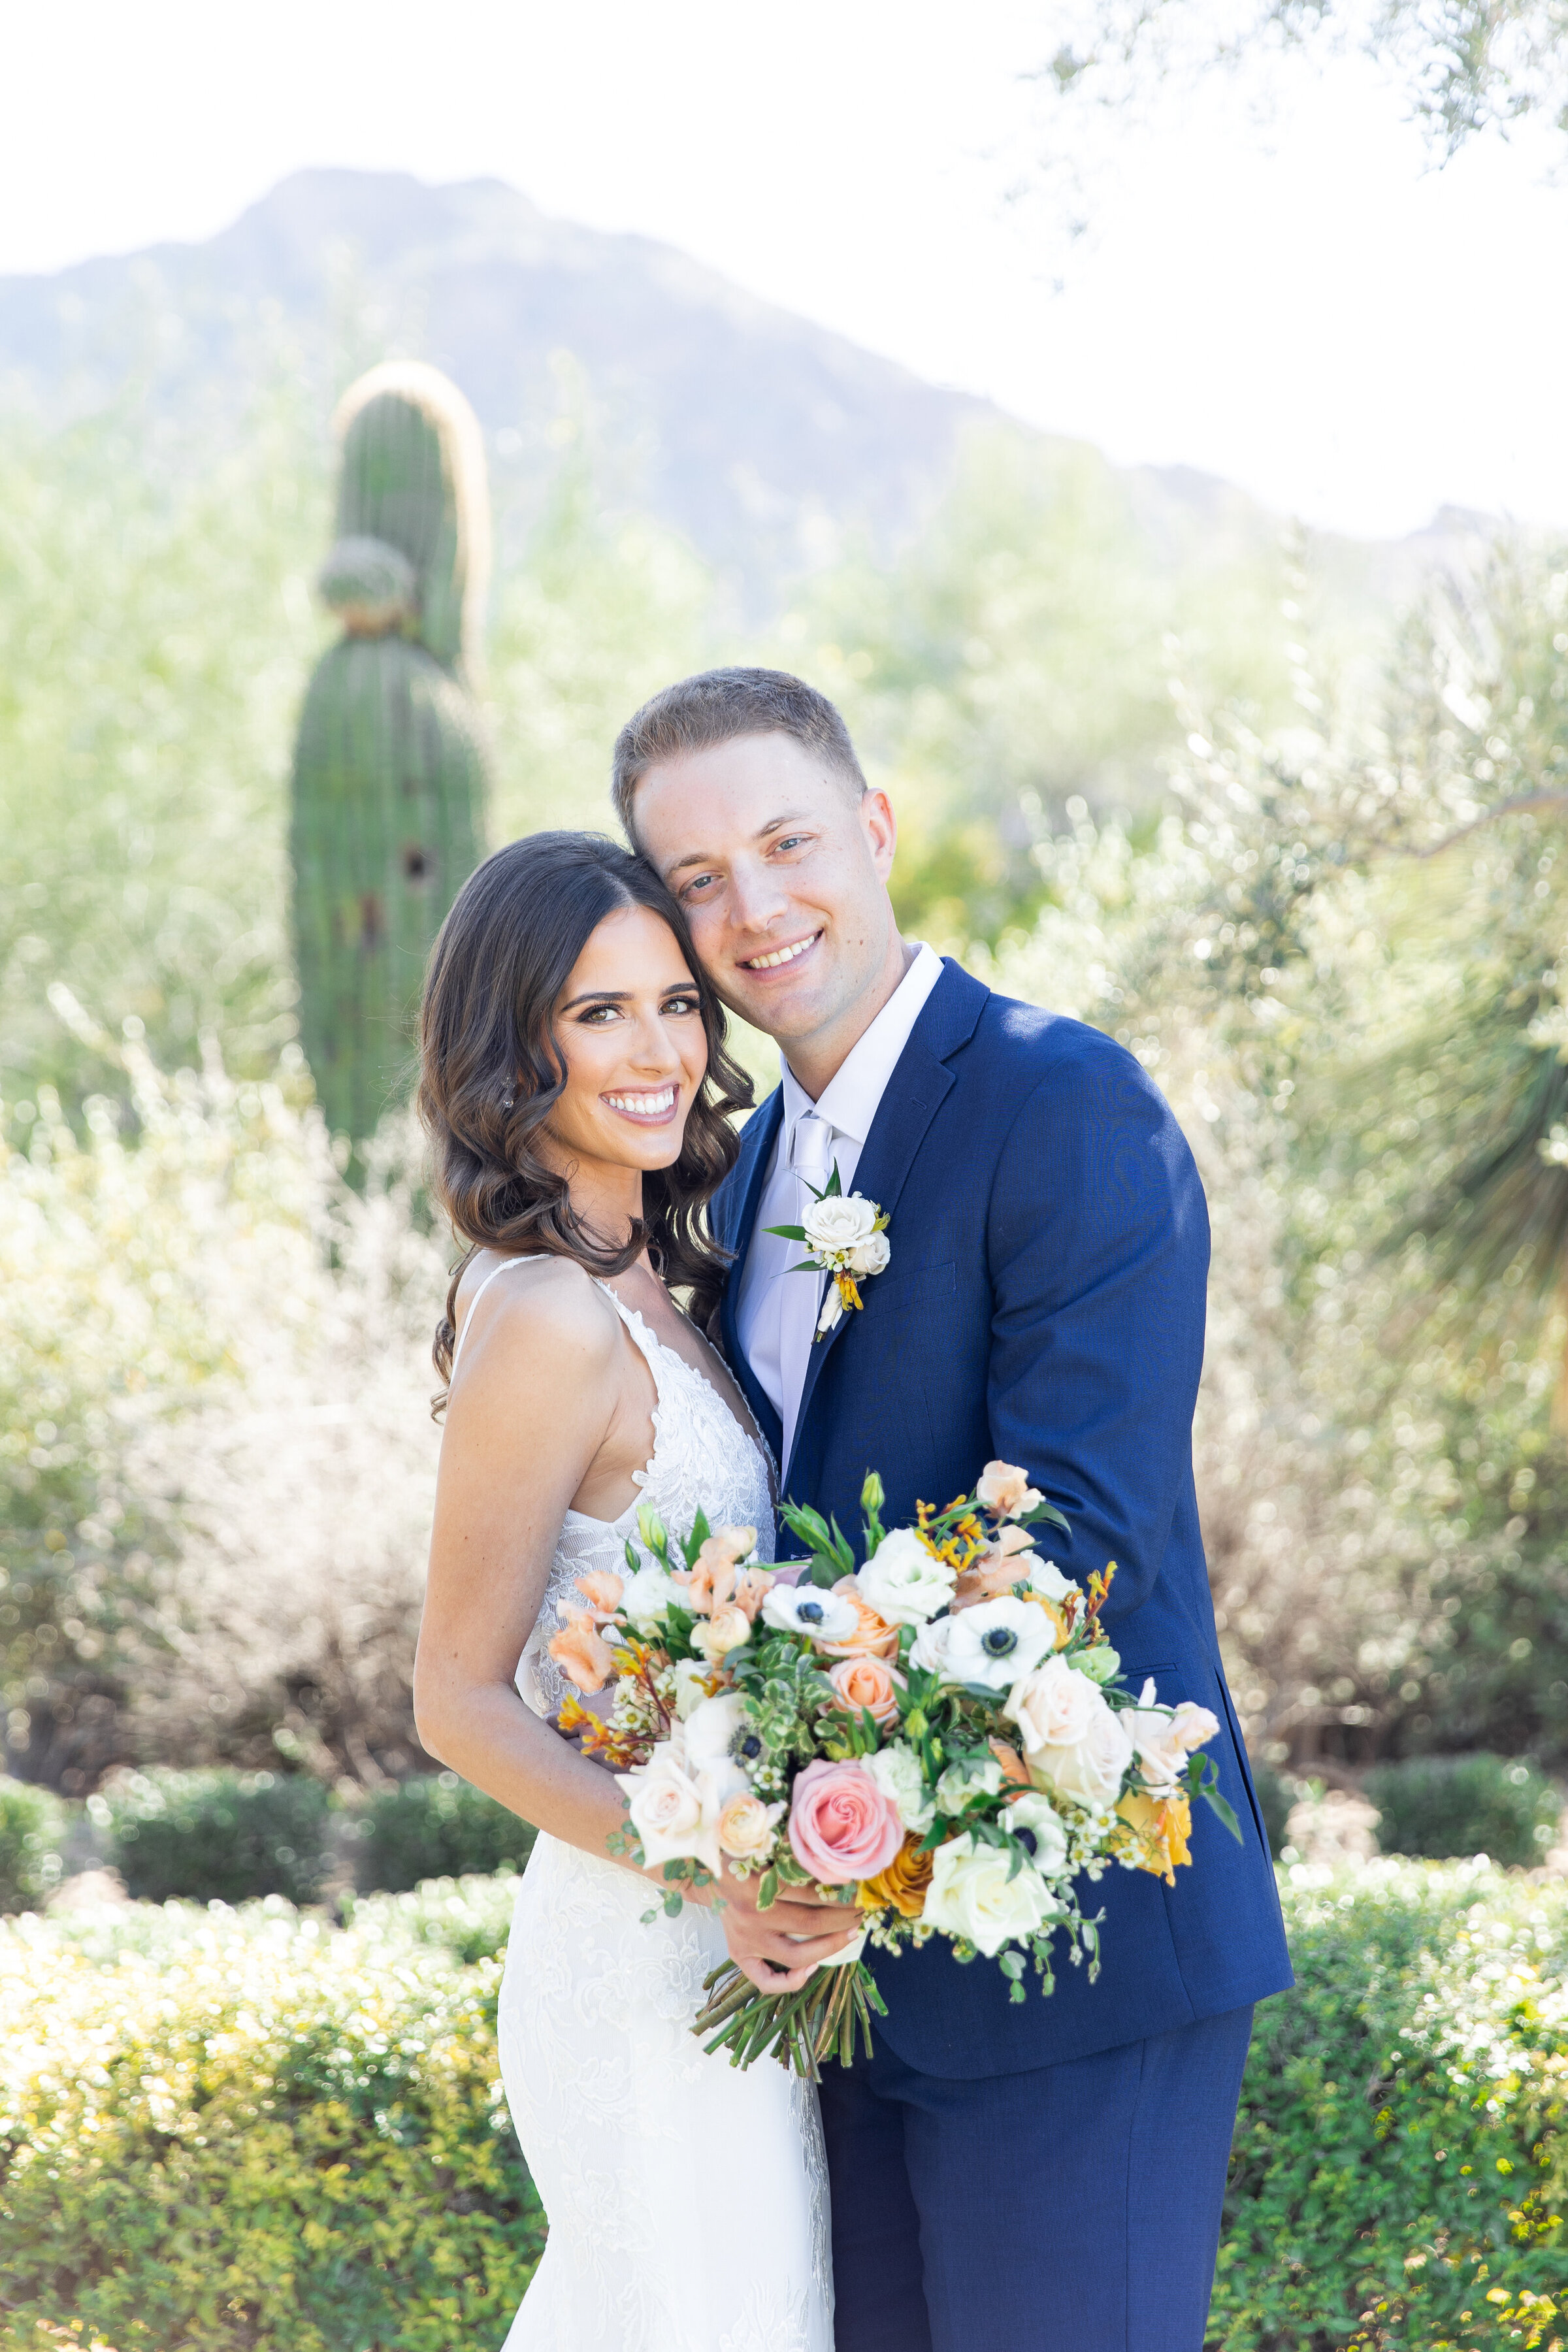 Karlie Colleen Photography - Kelcie & Ross - El Chorro Wedding - Arizona - Some like it classic -272